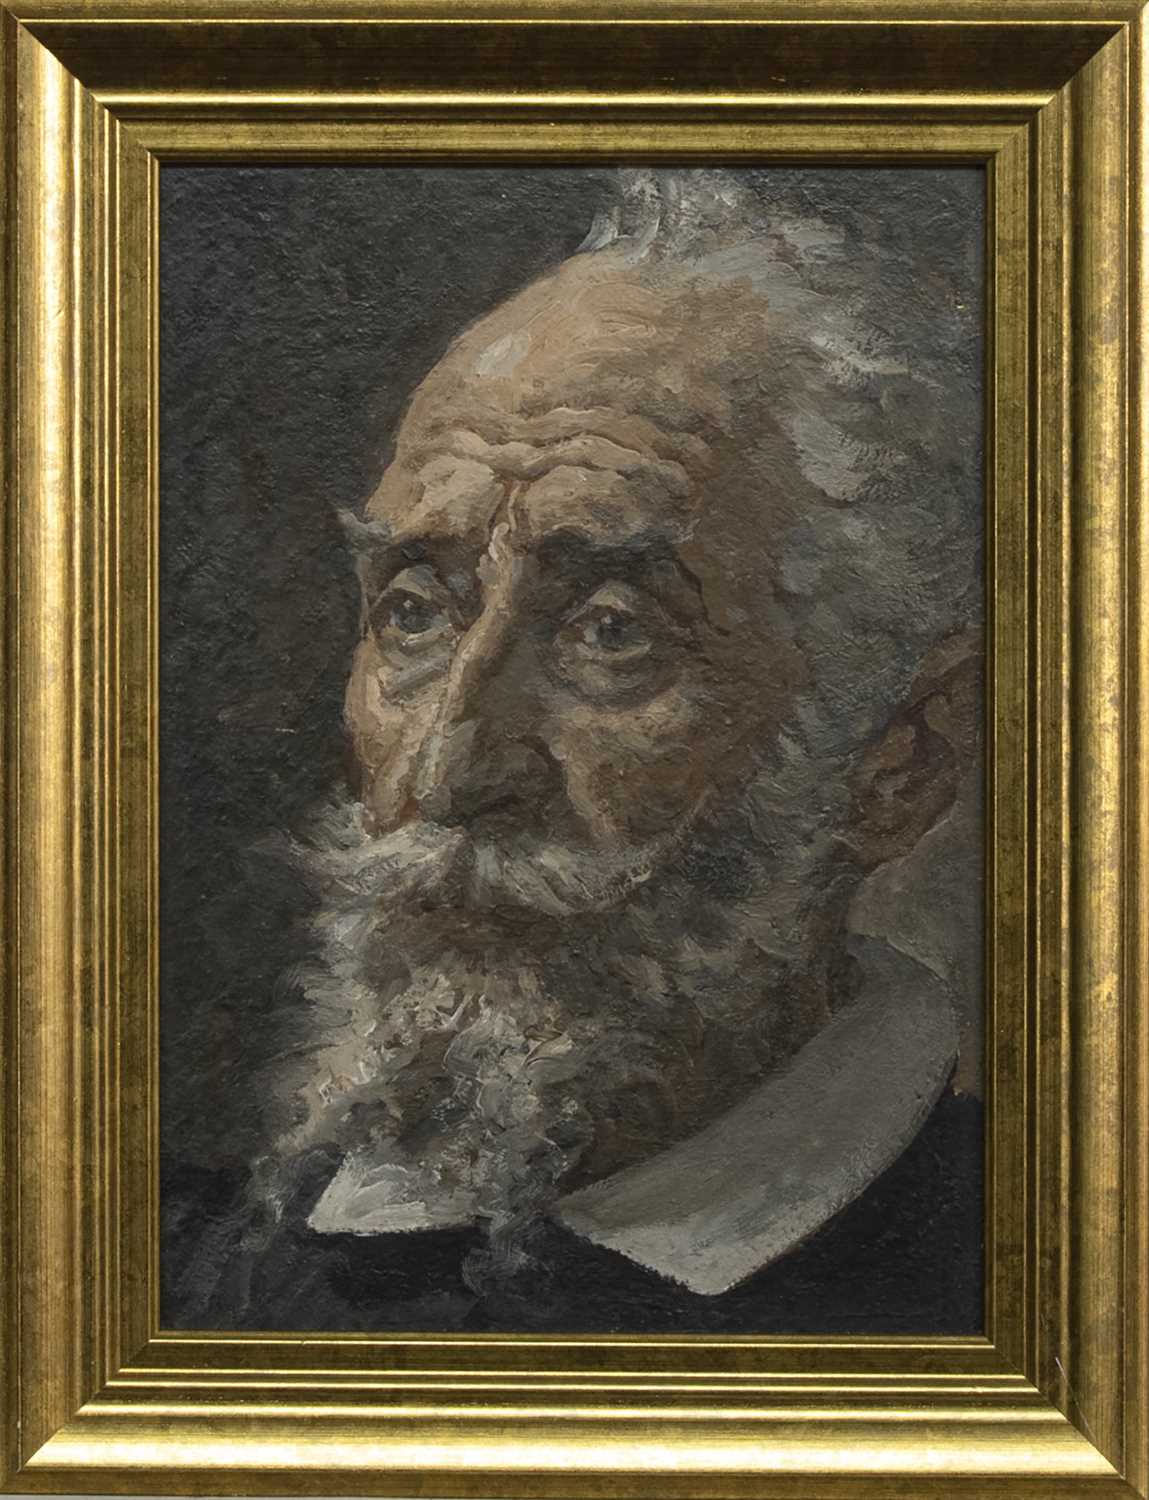 Lot 64 - PORTRAIT OF A MAN WITH A BEARD, AN OIL BY JOHN BULLOCH SOUTER